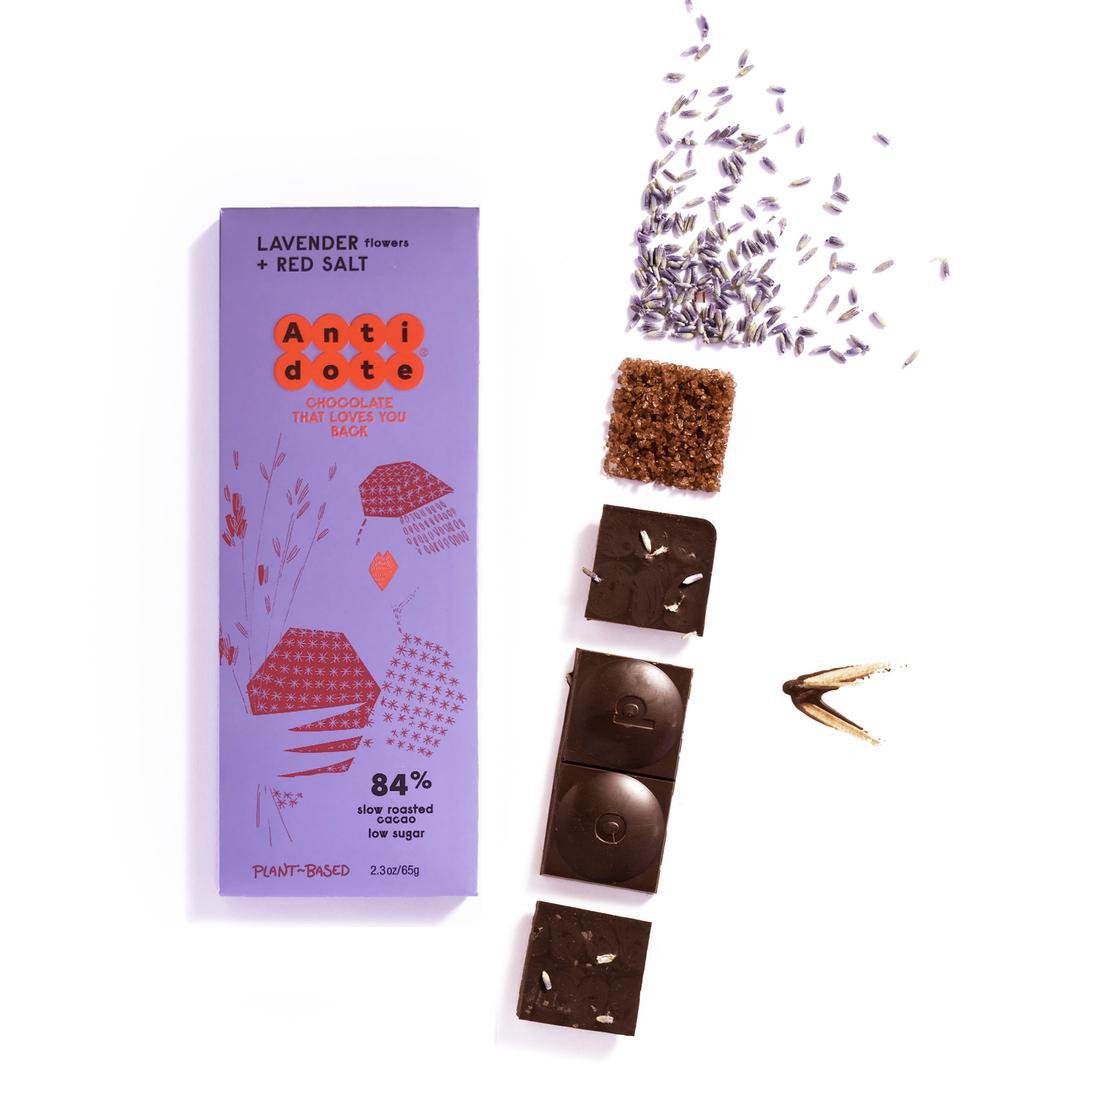 Antidote Chocolate - 'Lavender Flowers & Red Salt' Bar (65G | 84%) - The Epicurean Trader